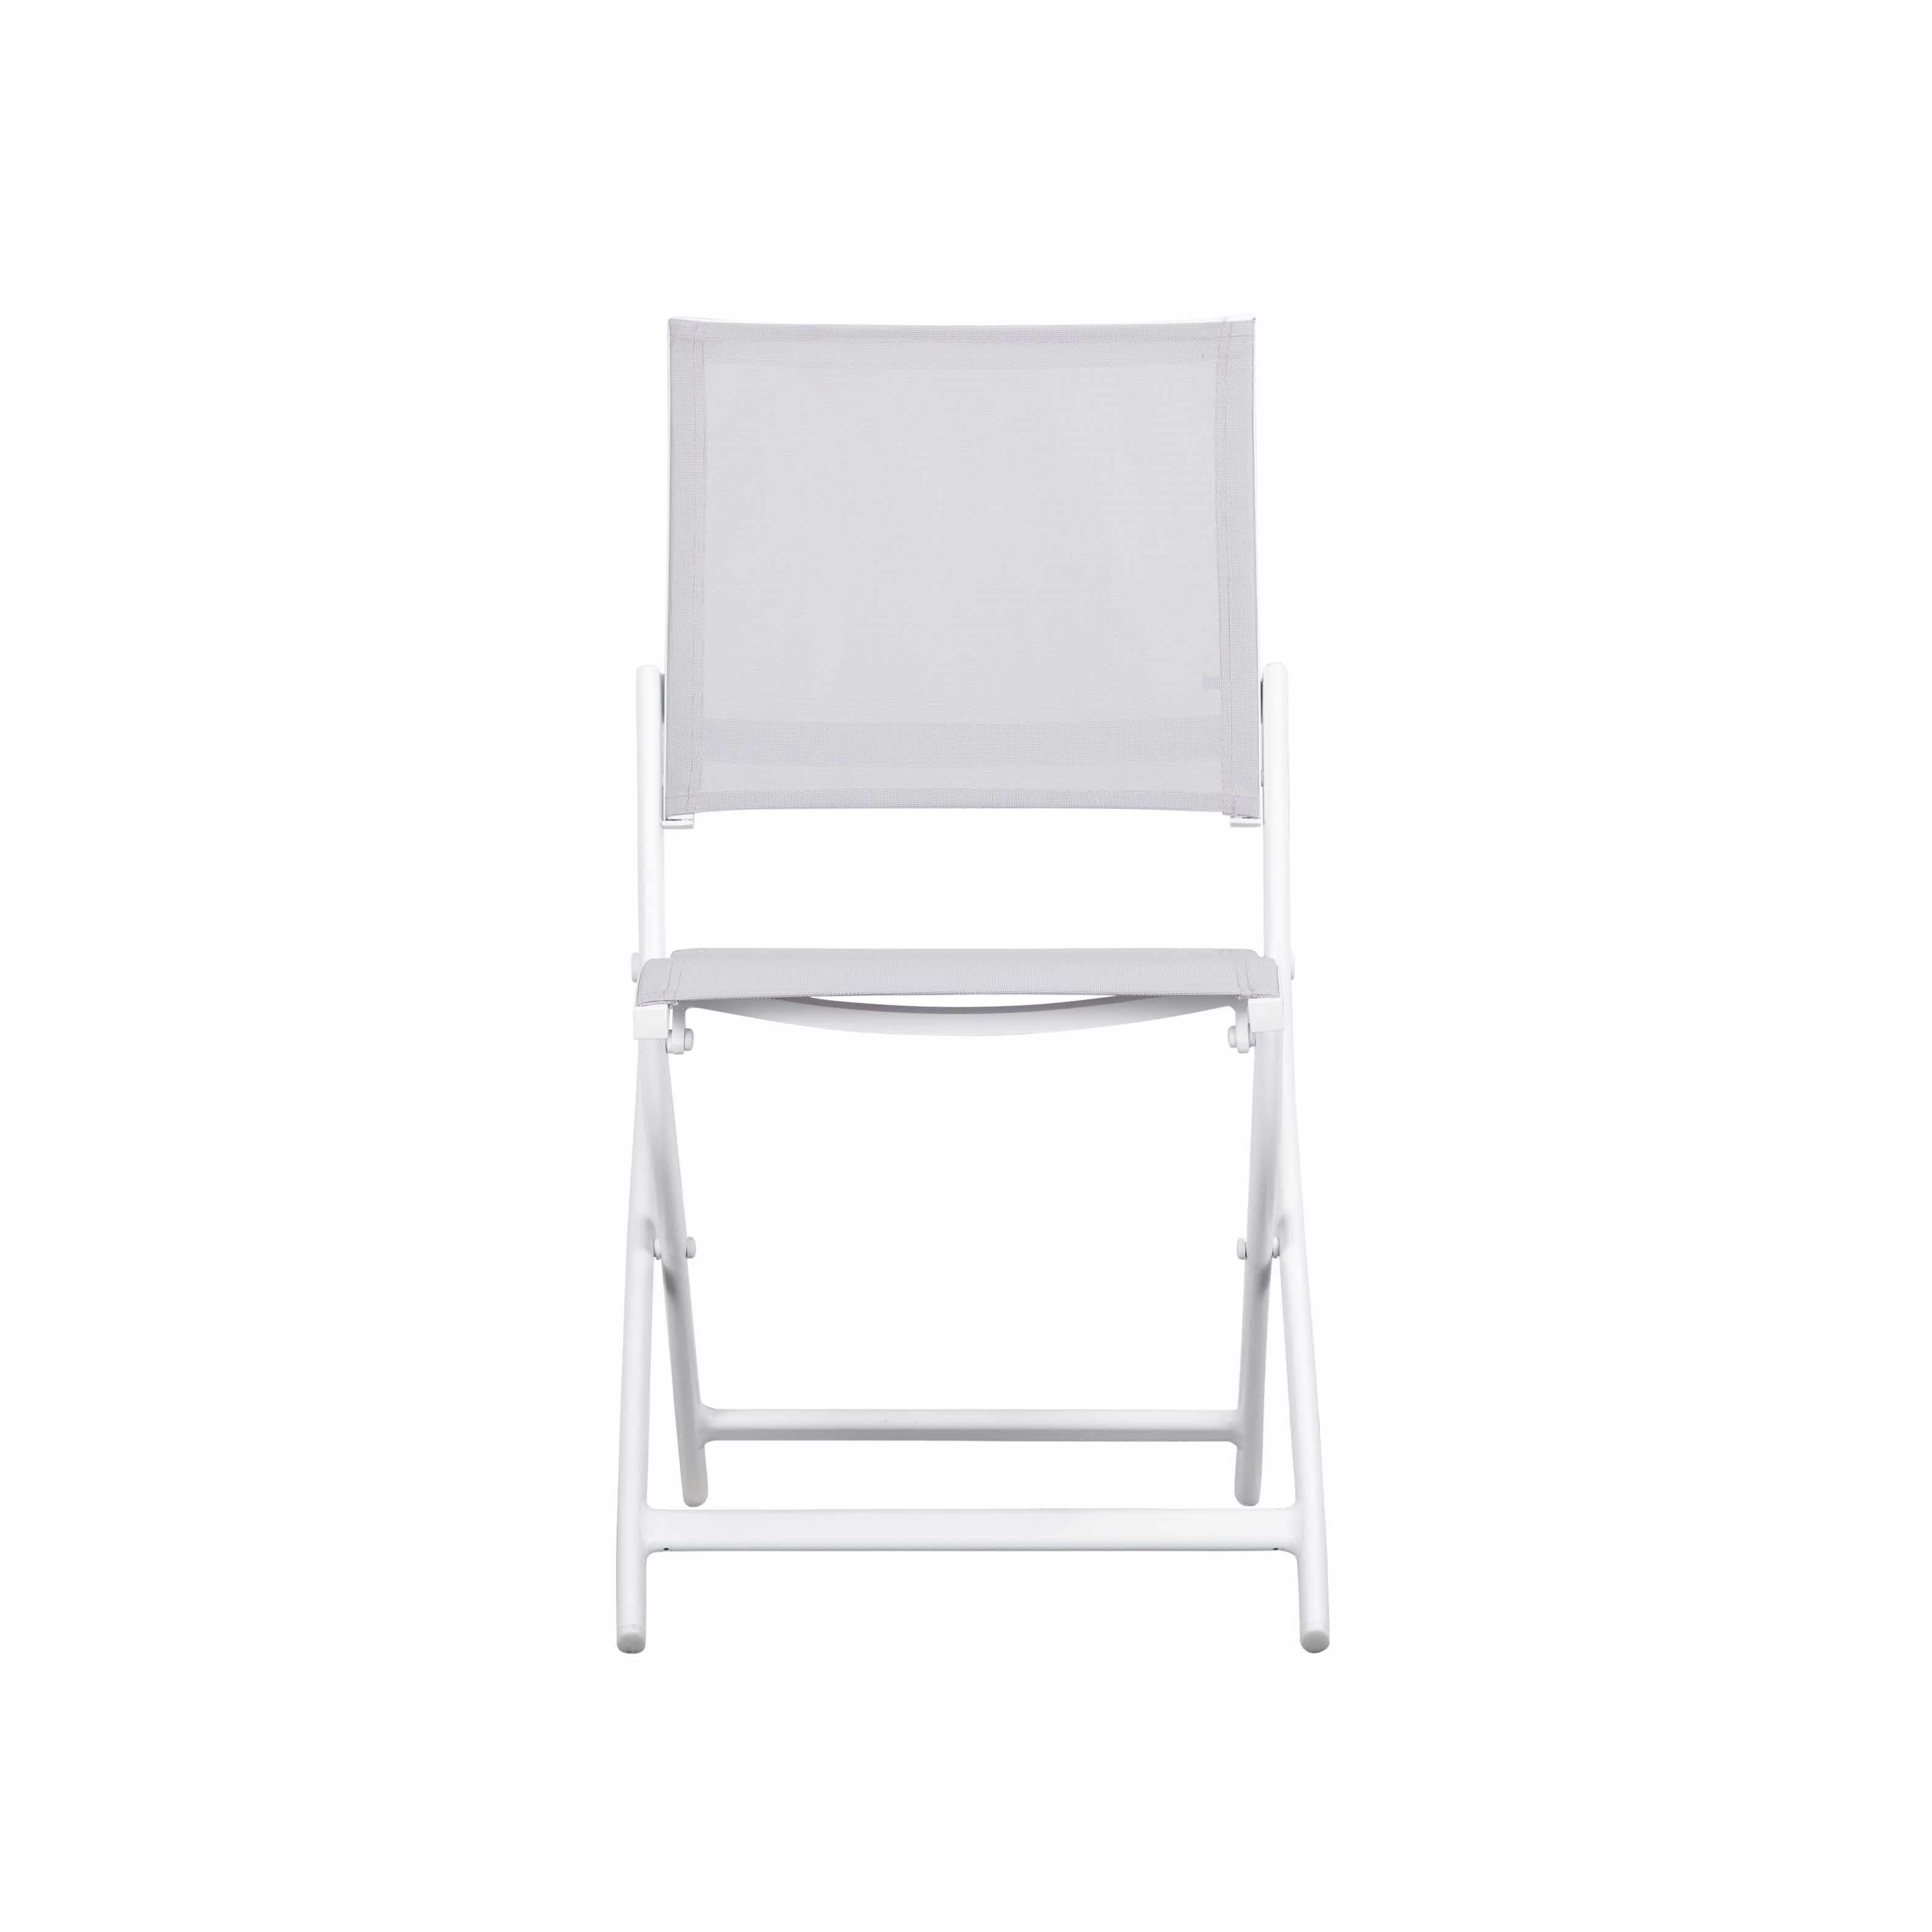 Tiffany folding chair S3